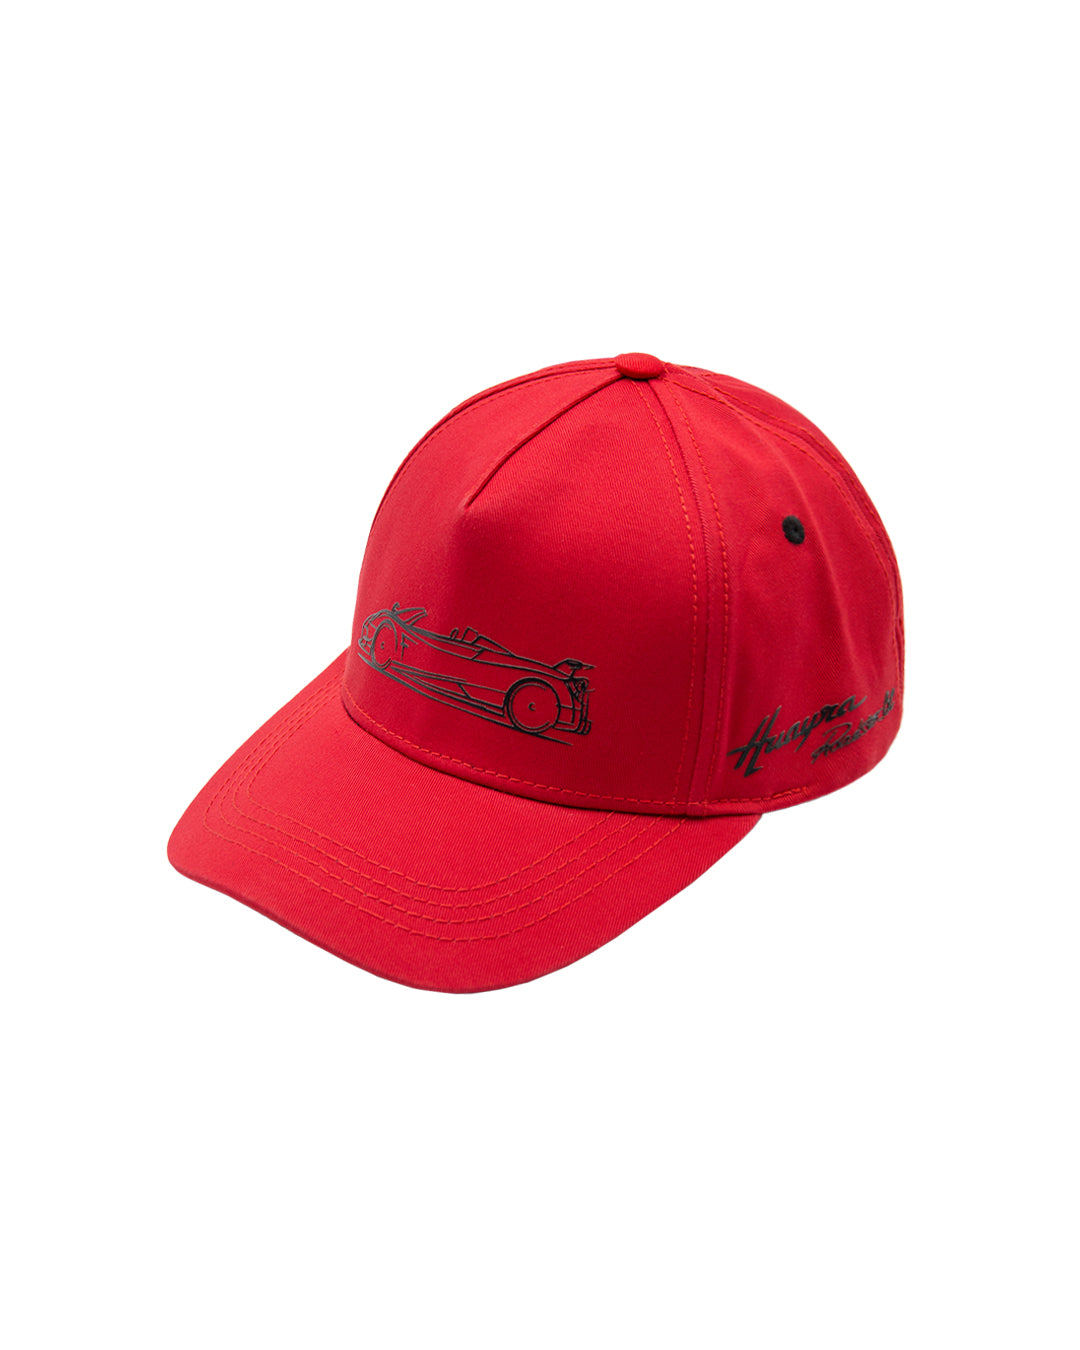 Pagani “Huayra Roadster BC” Silhouette Cap Kid Red